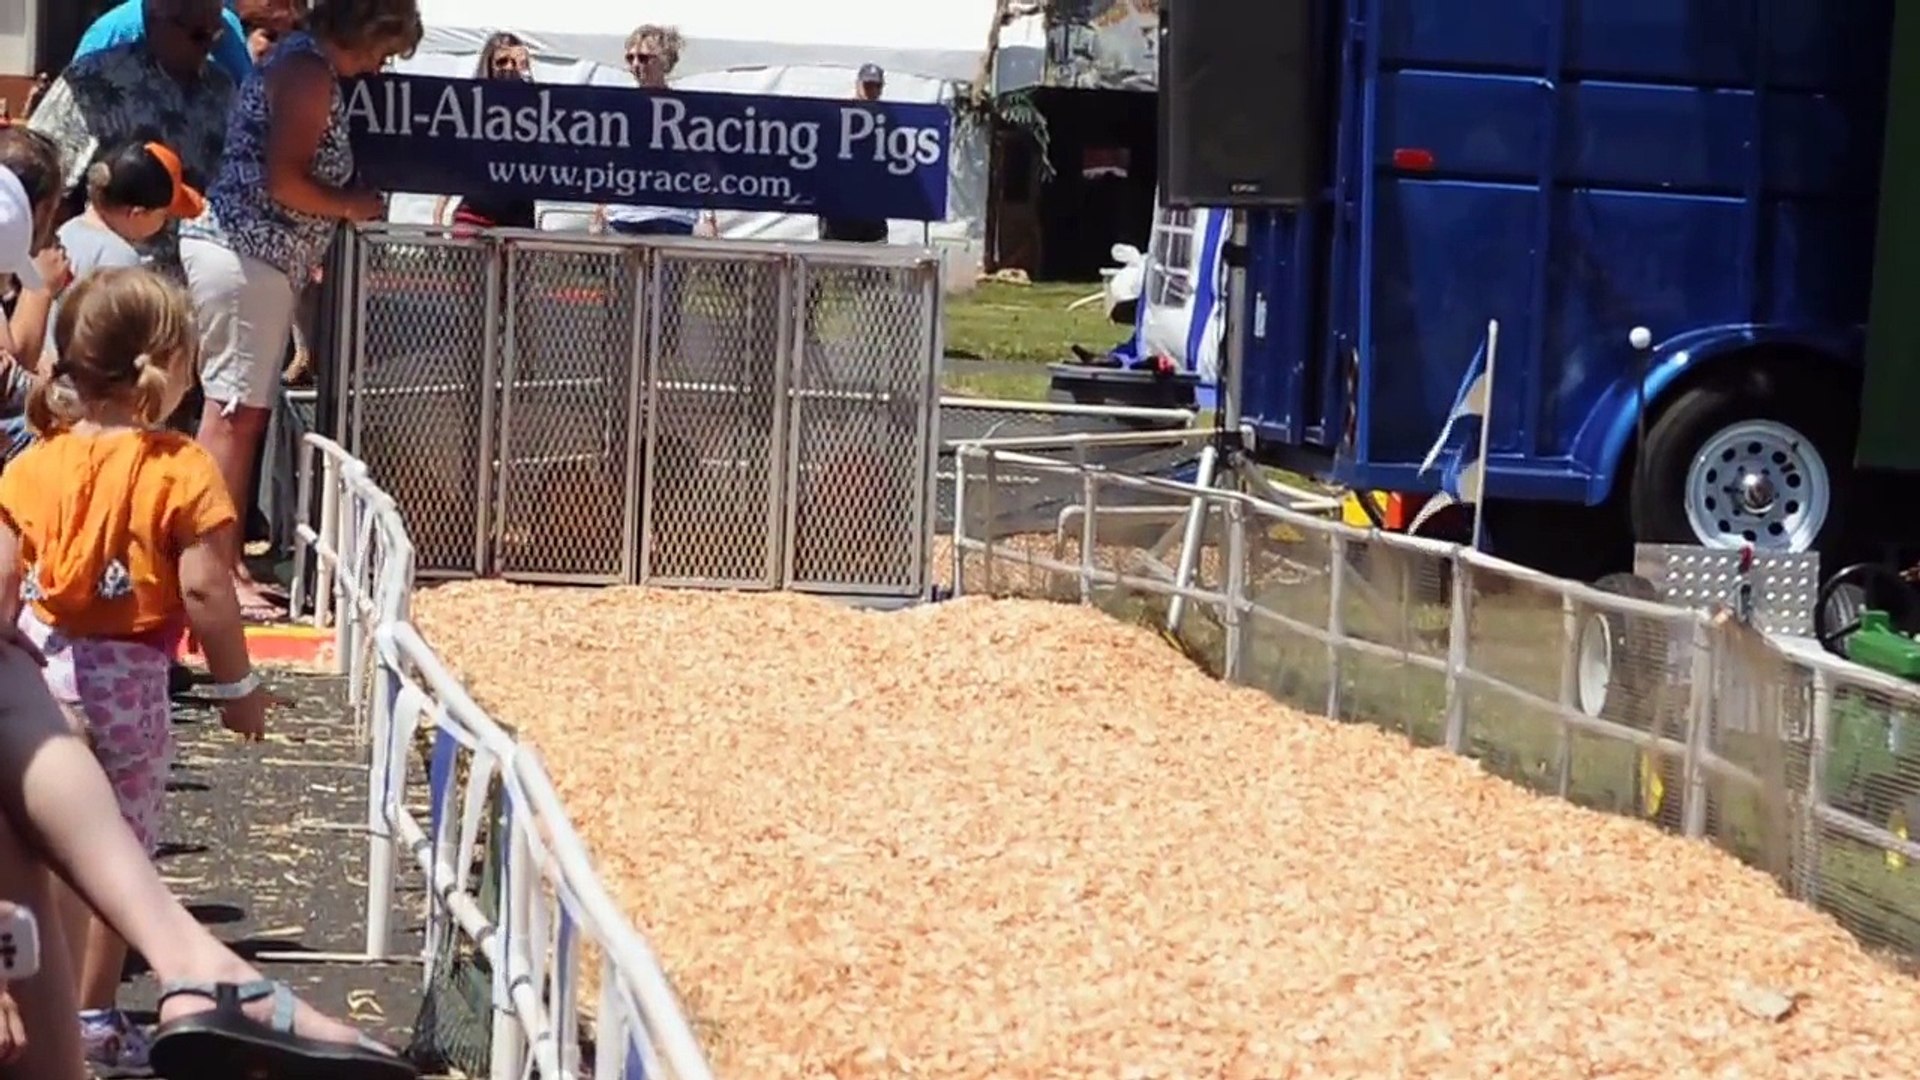 Alask Pig Race, Lane County Fair, Eugene, Oregon